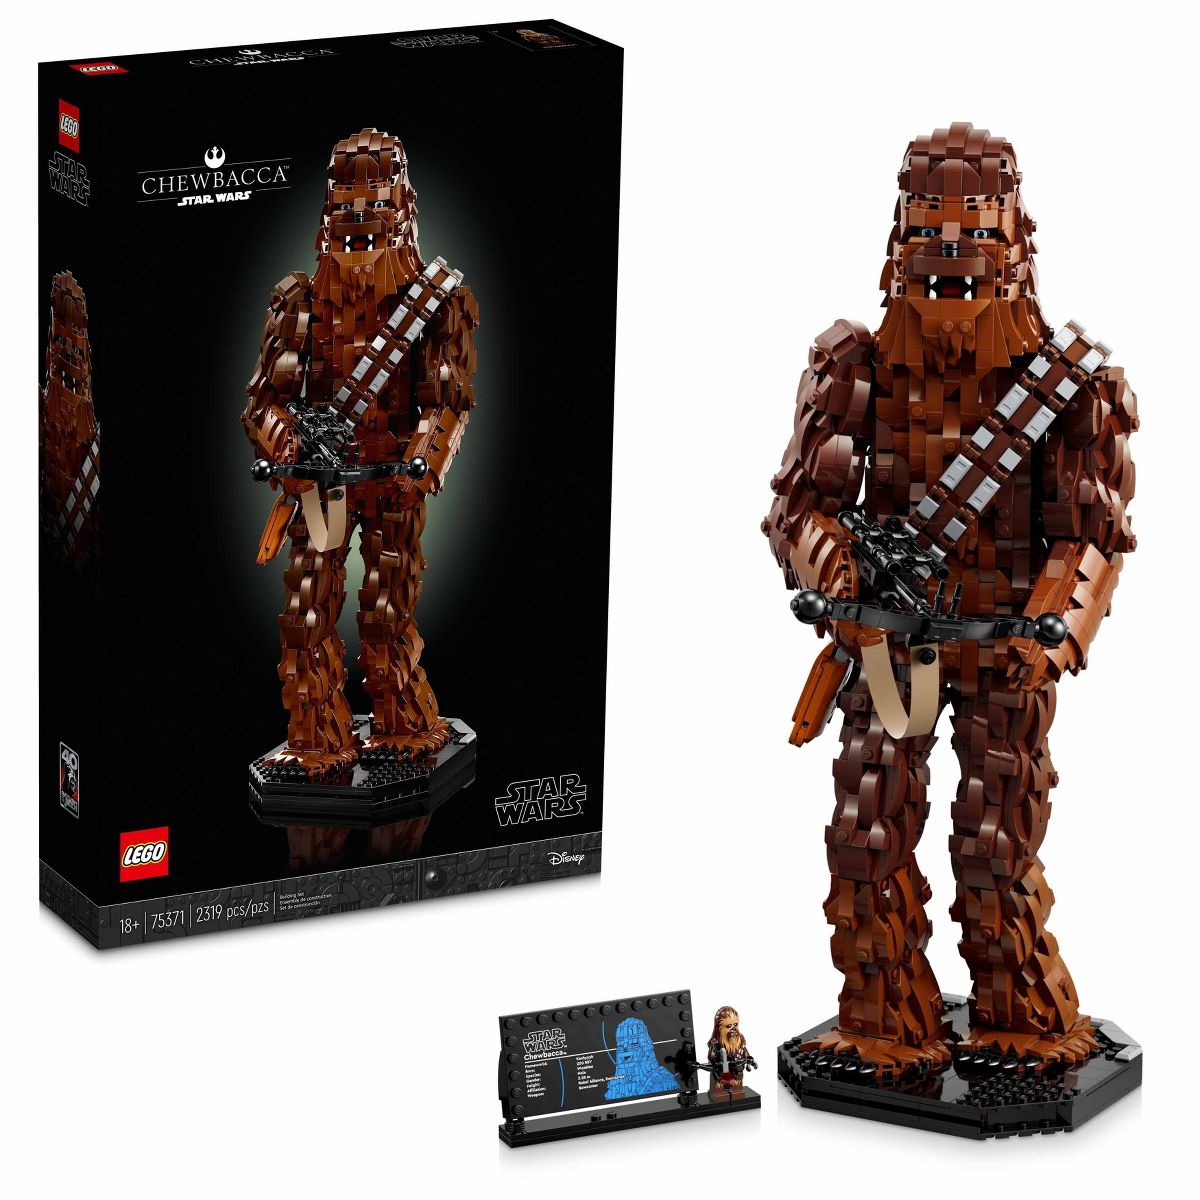 SW Chewbacca Figure Building Lego Set 1